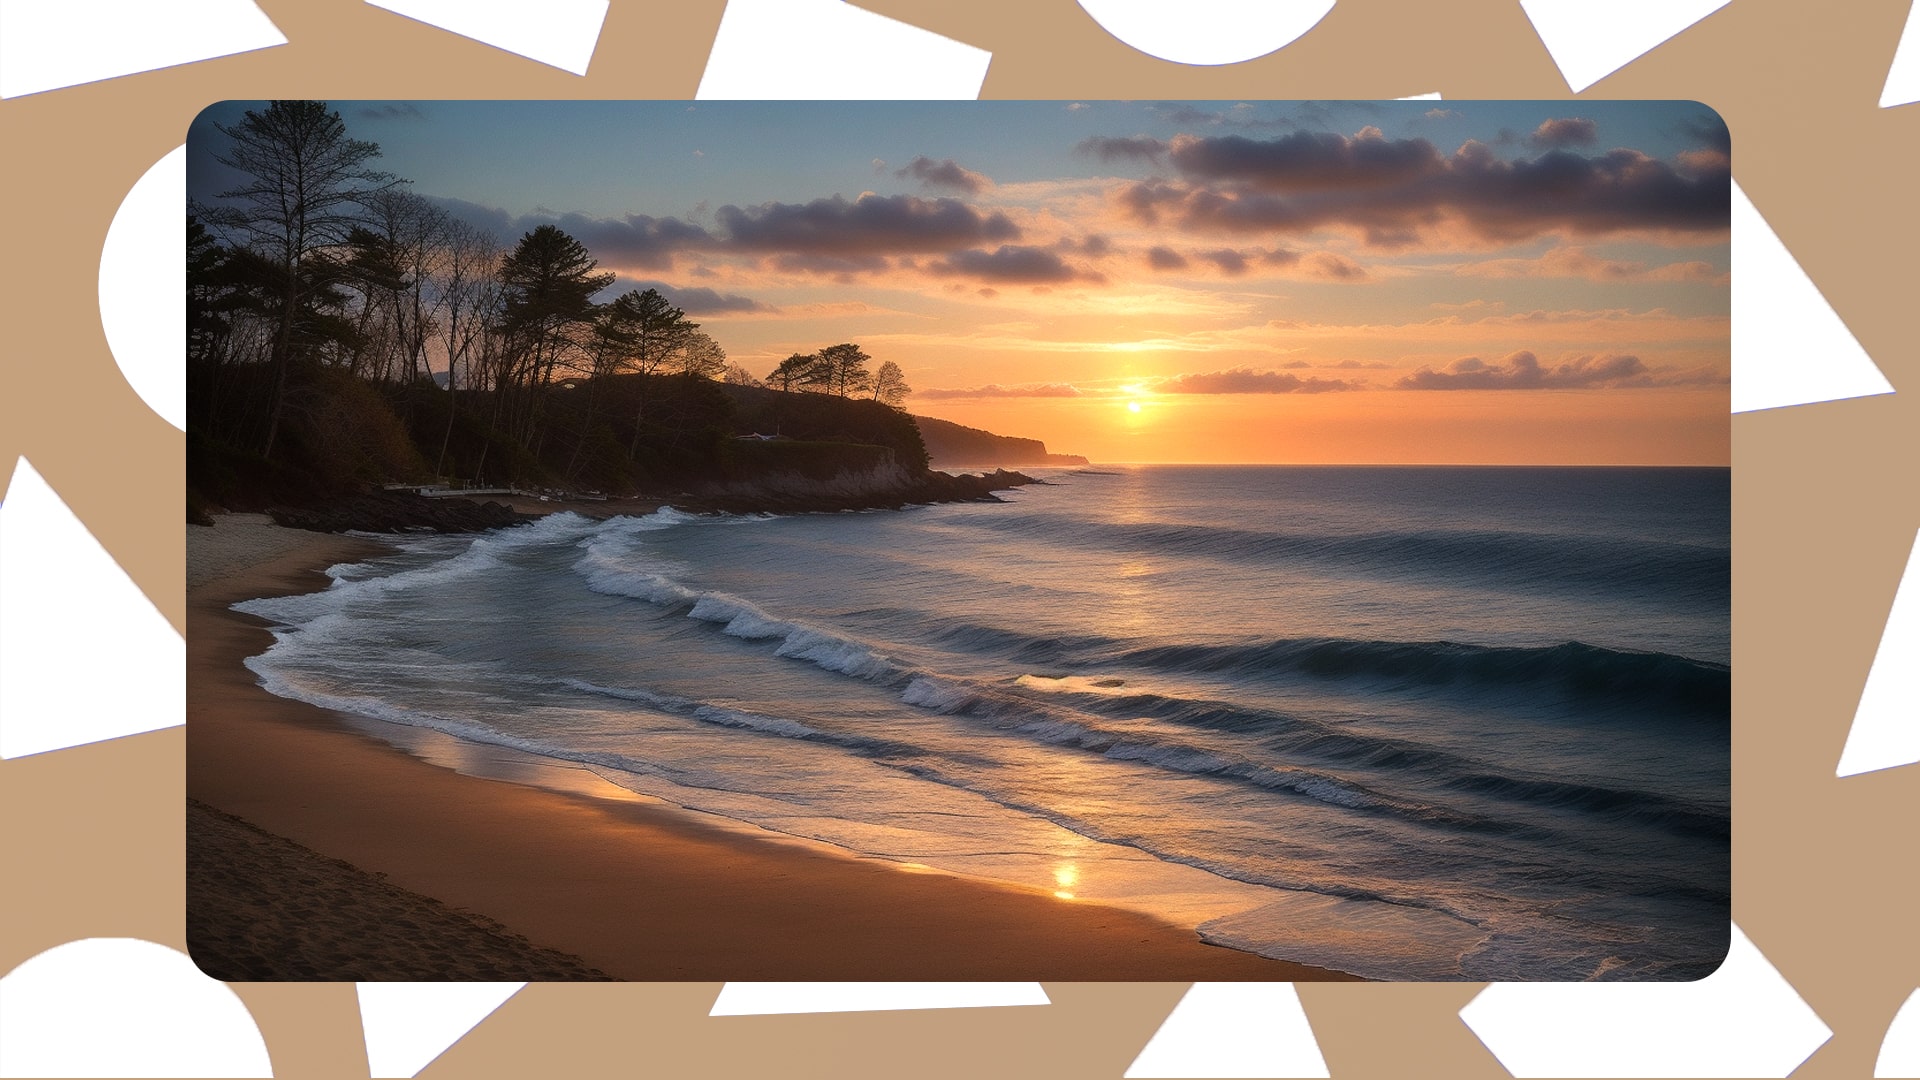 a serene beach scene with the sun gently setting over the calm ocean waves